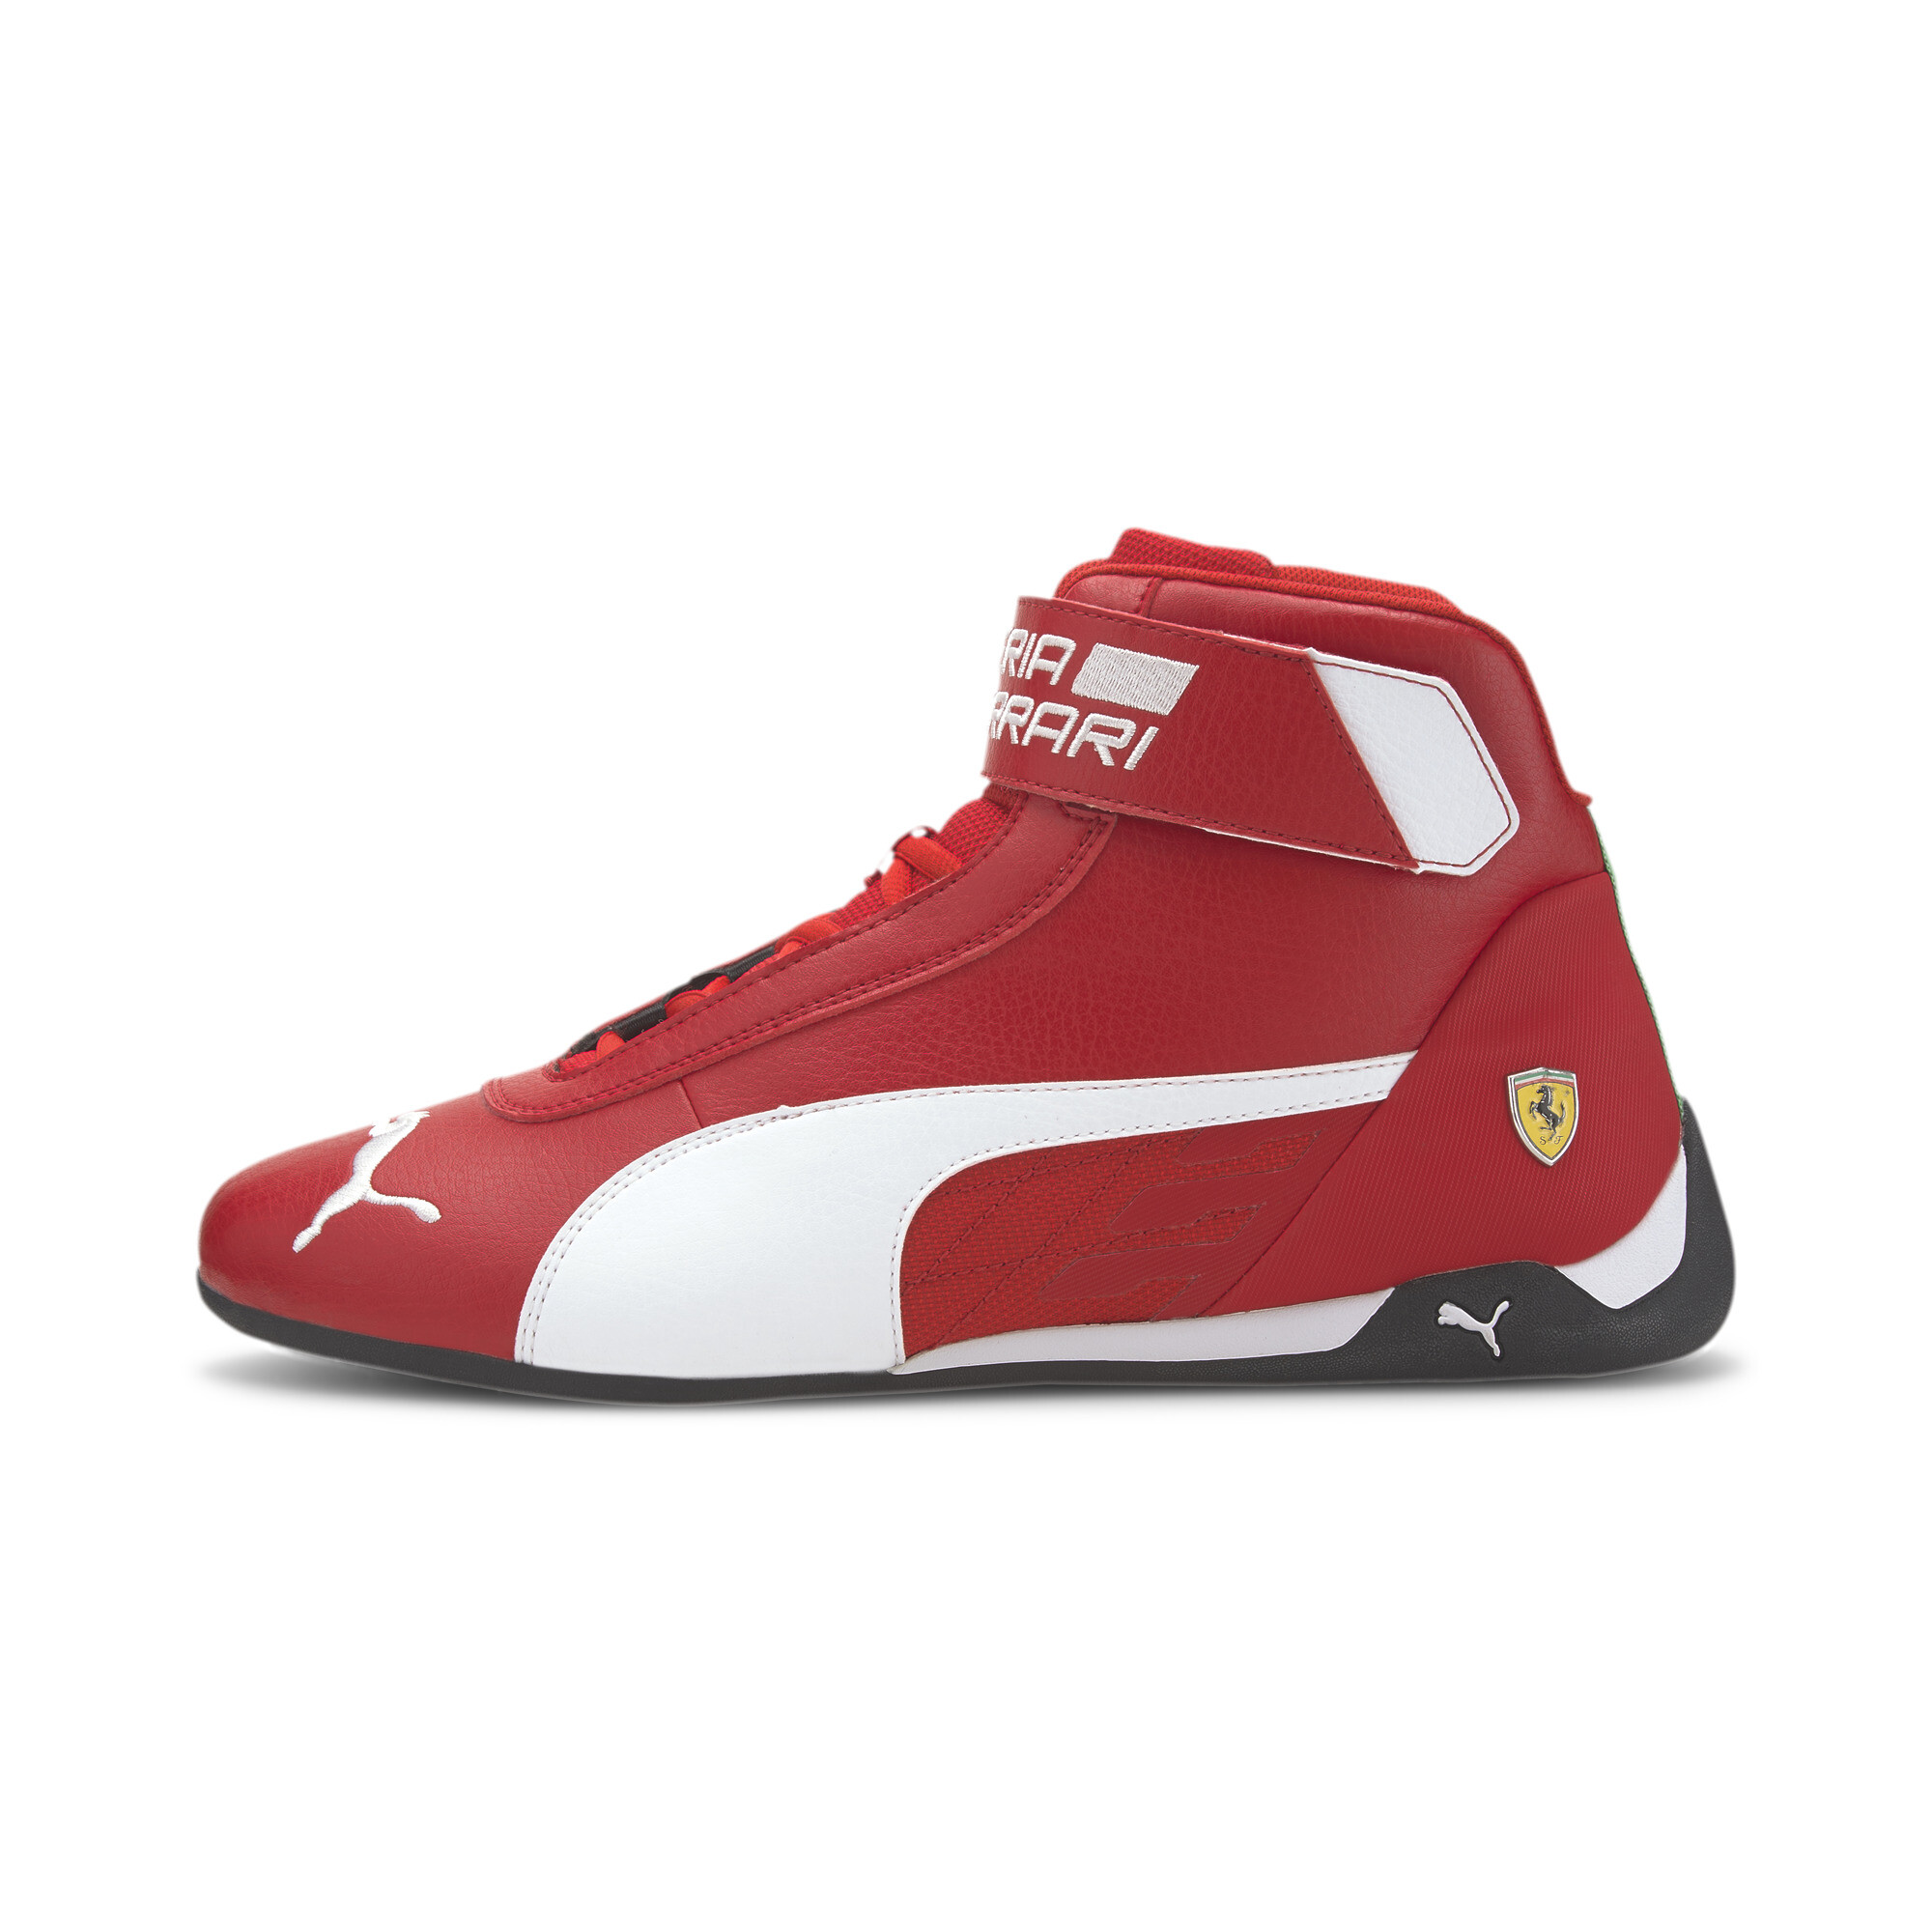 PUMA Men's Scuderia Ferrari R-Cat Mid Motorsport Shoes | eBay